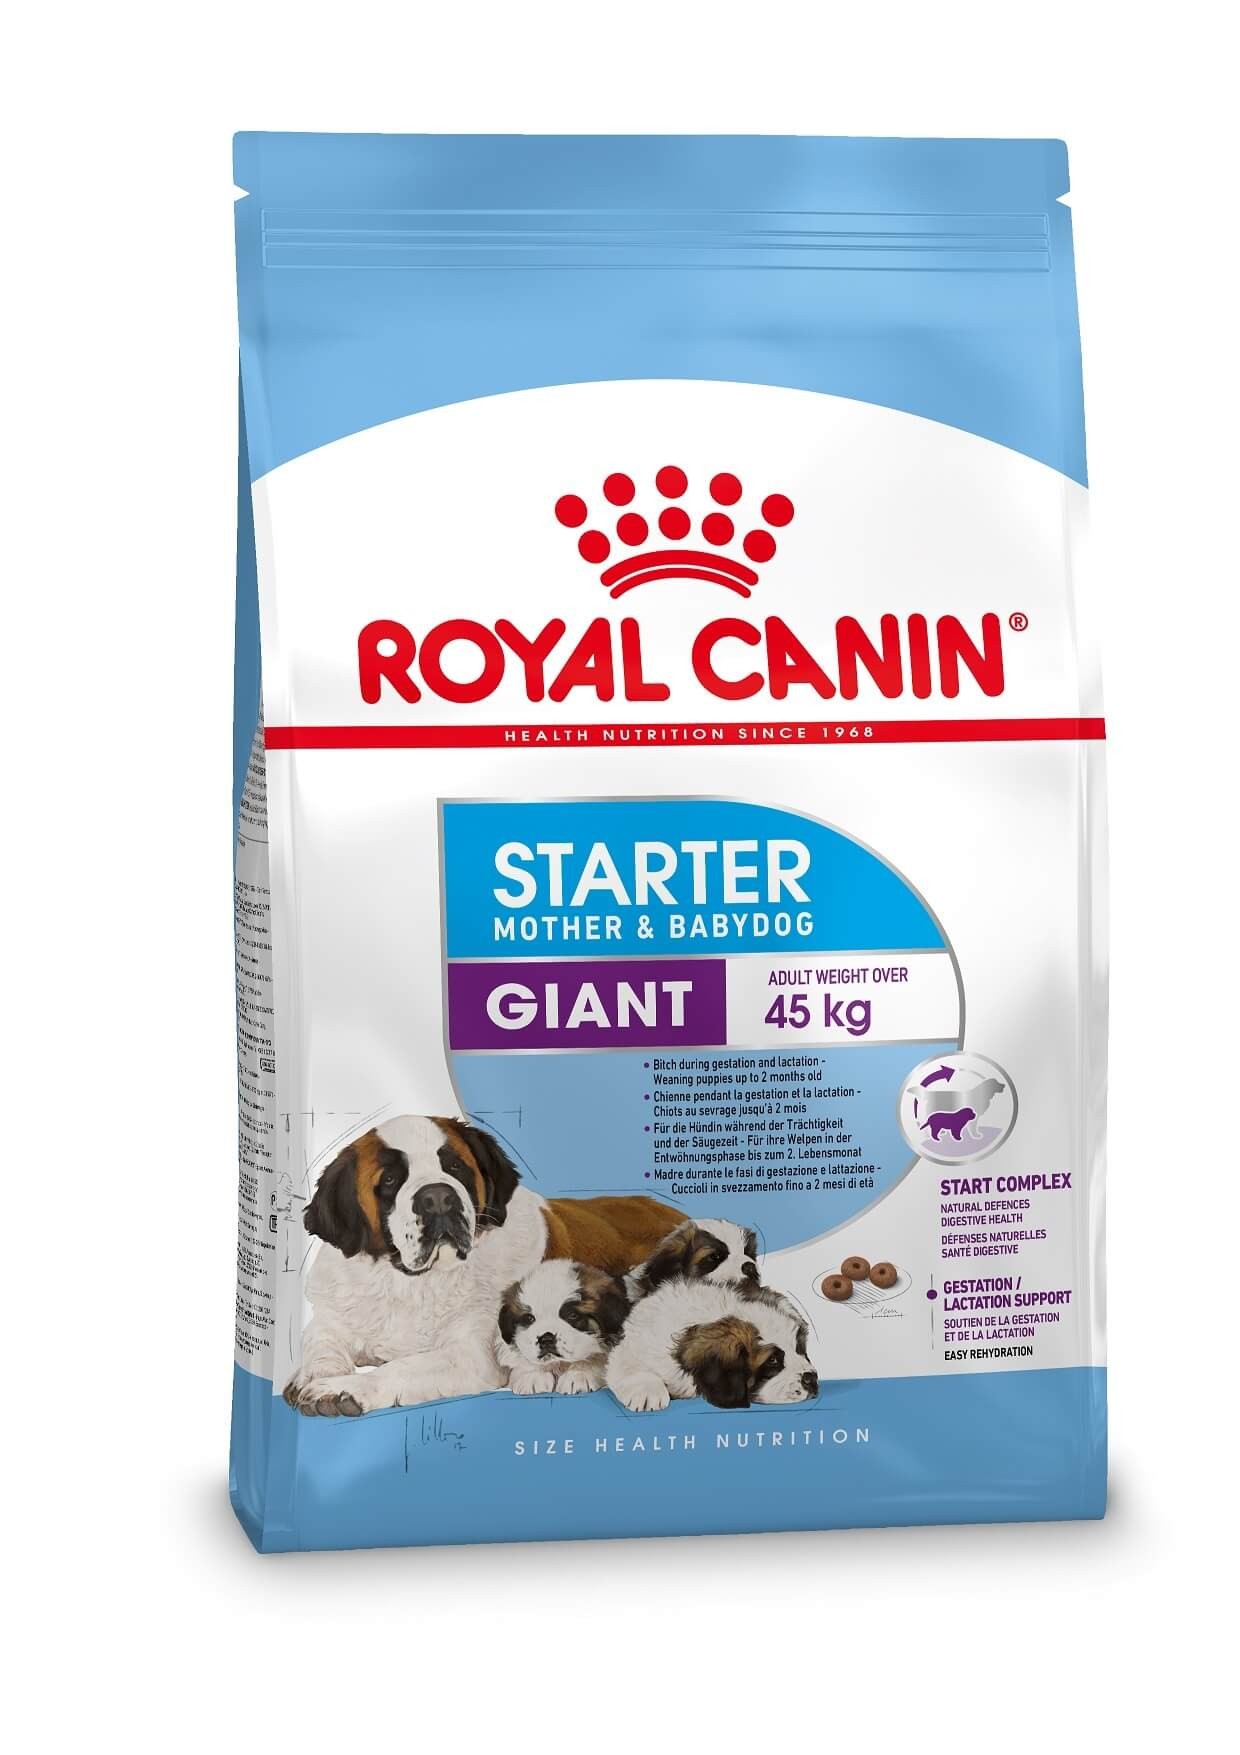 Royal Canin Giant Starter Mother & Babydog pour chiot